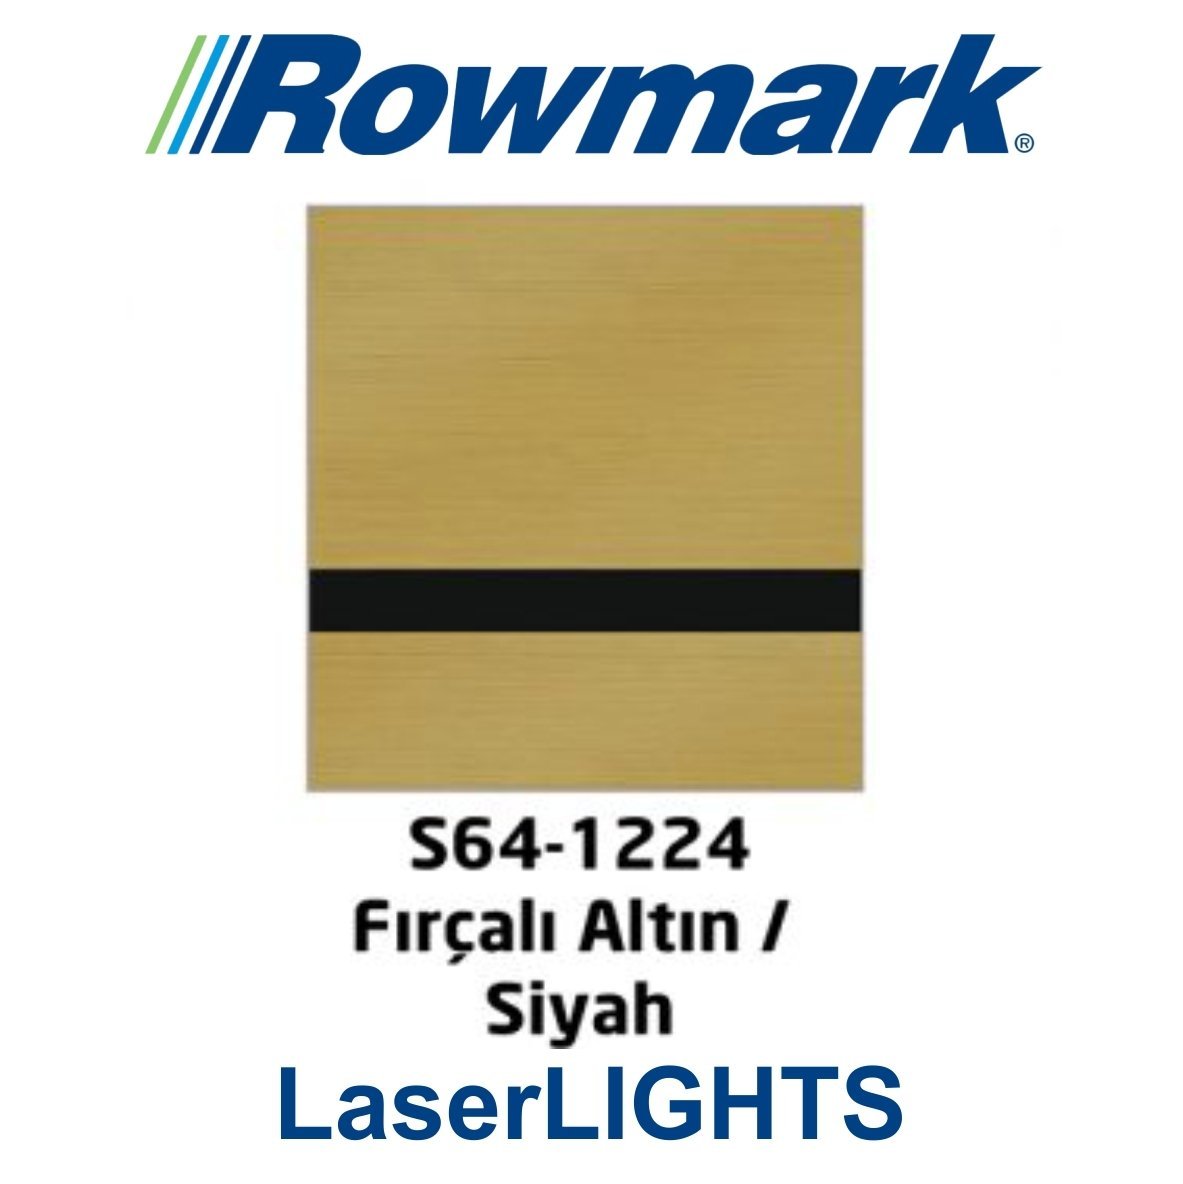 LaserLights 0.2 Fırçalı Altın (Brushed Gold) / Siyah Lazer Plaka - Rowmark S64-1224